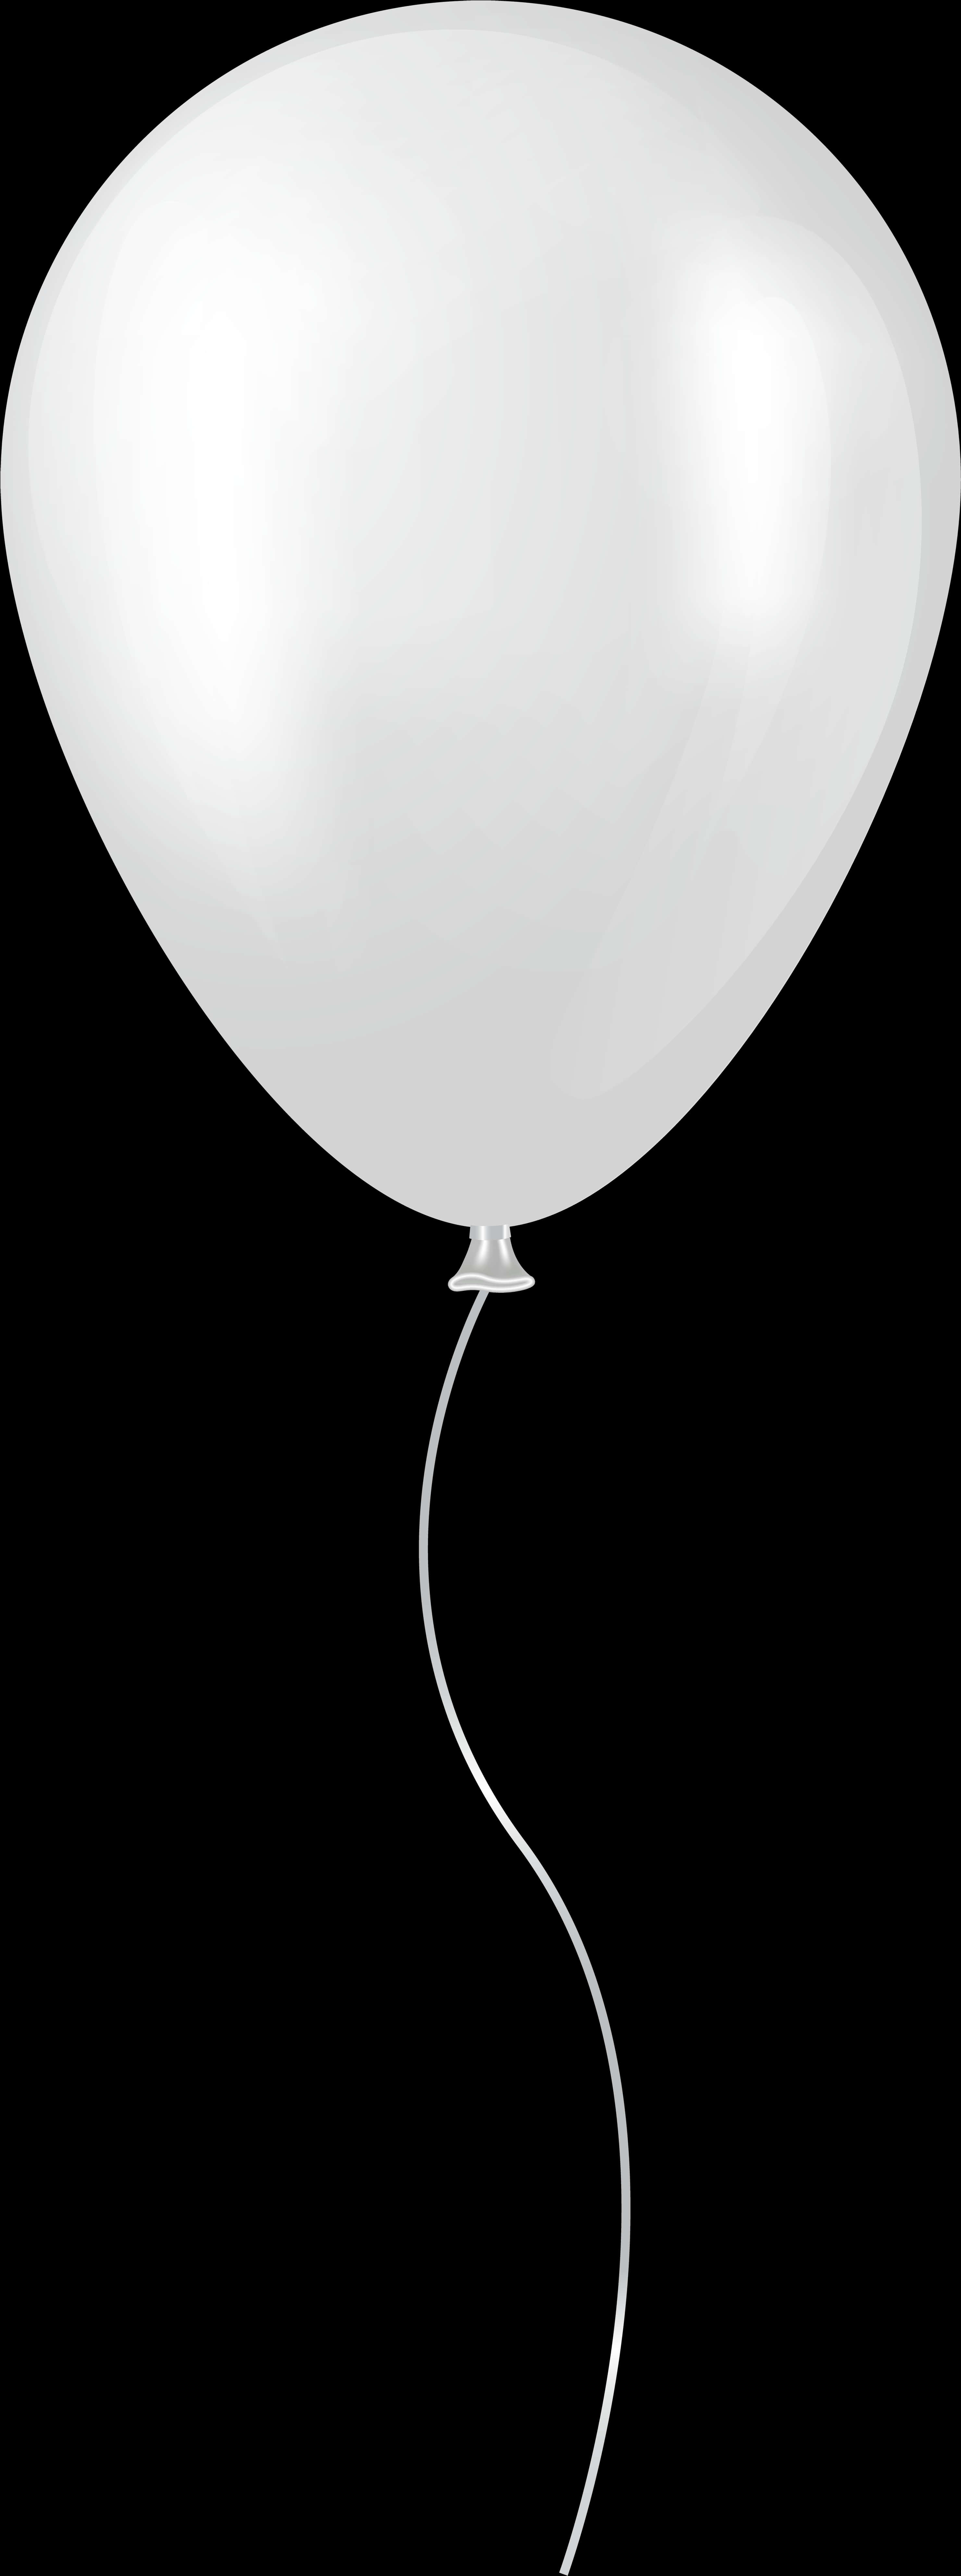 A White Balloon On A Black Background